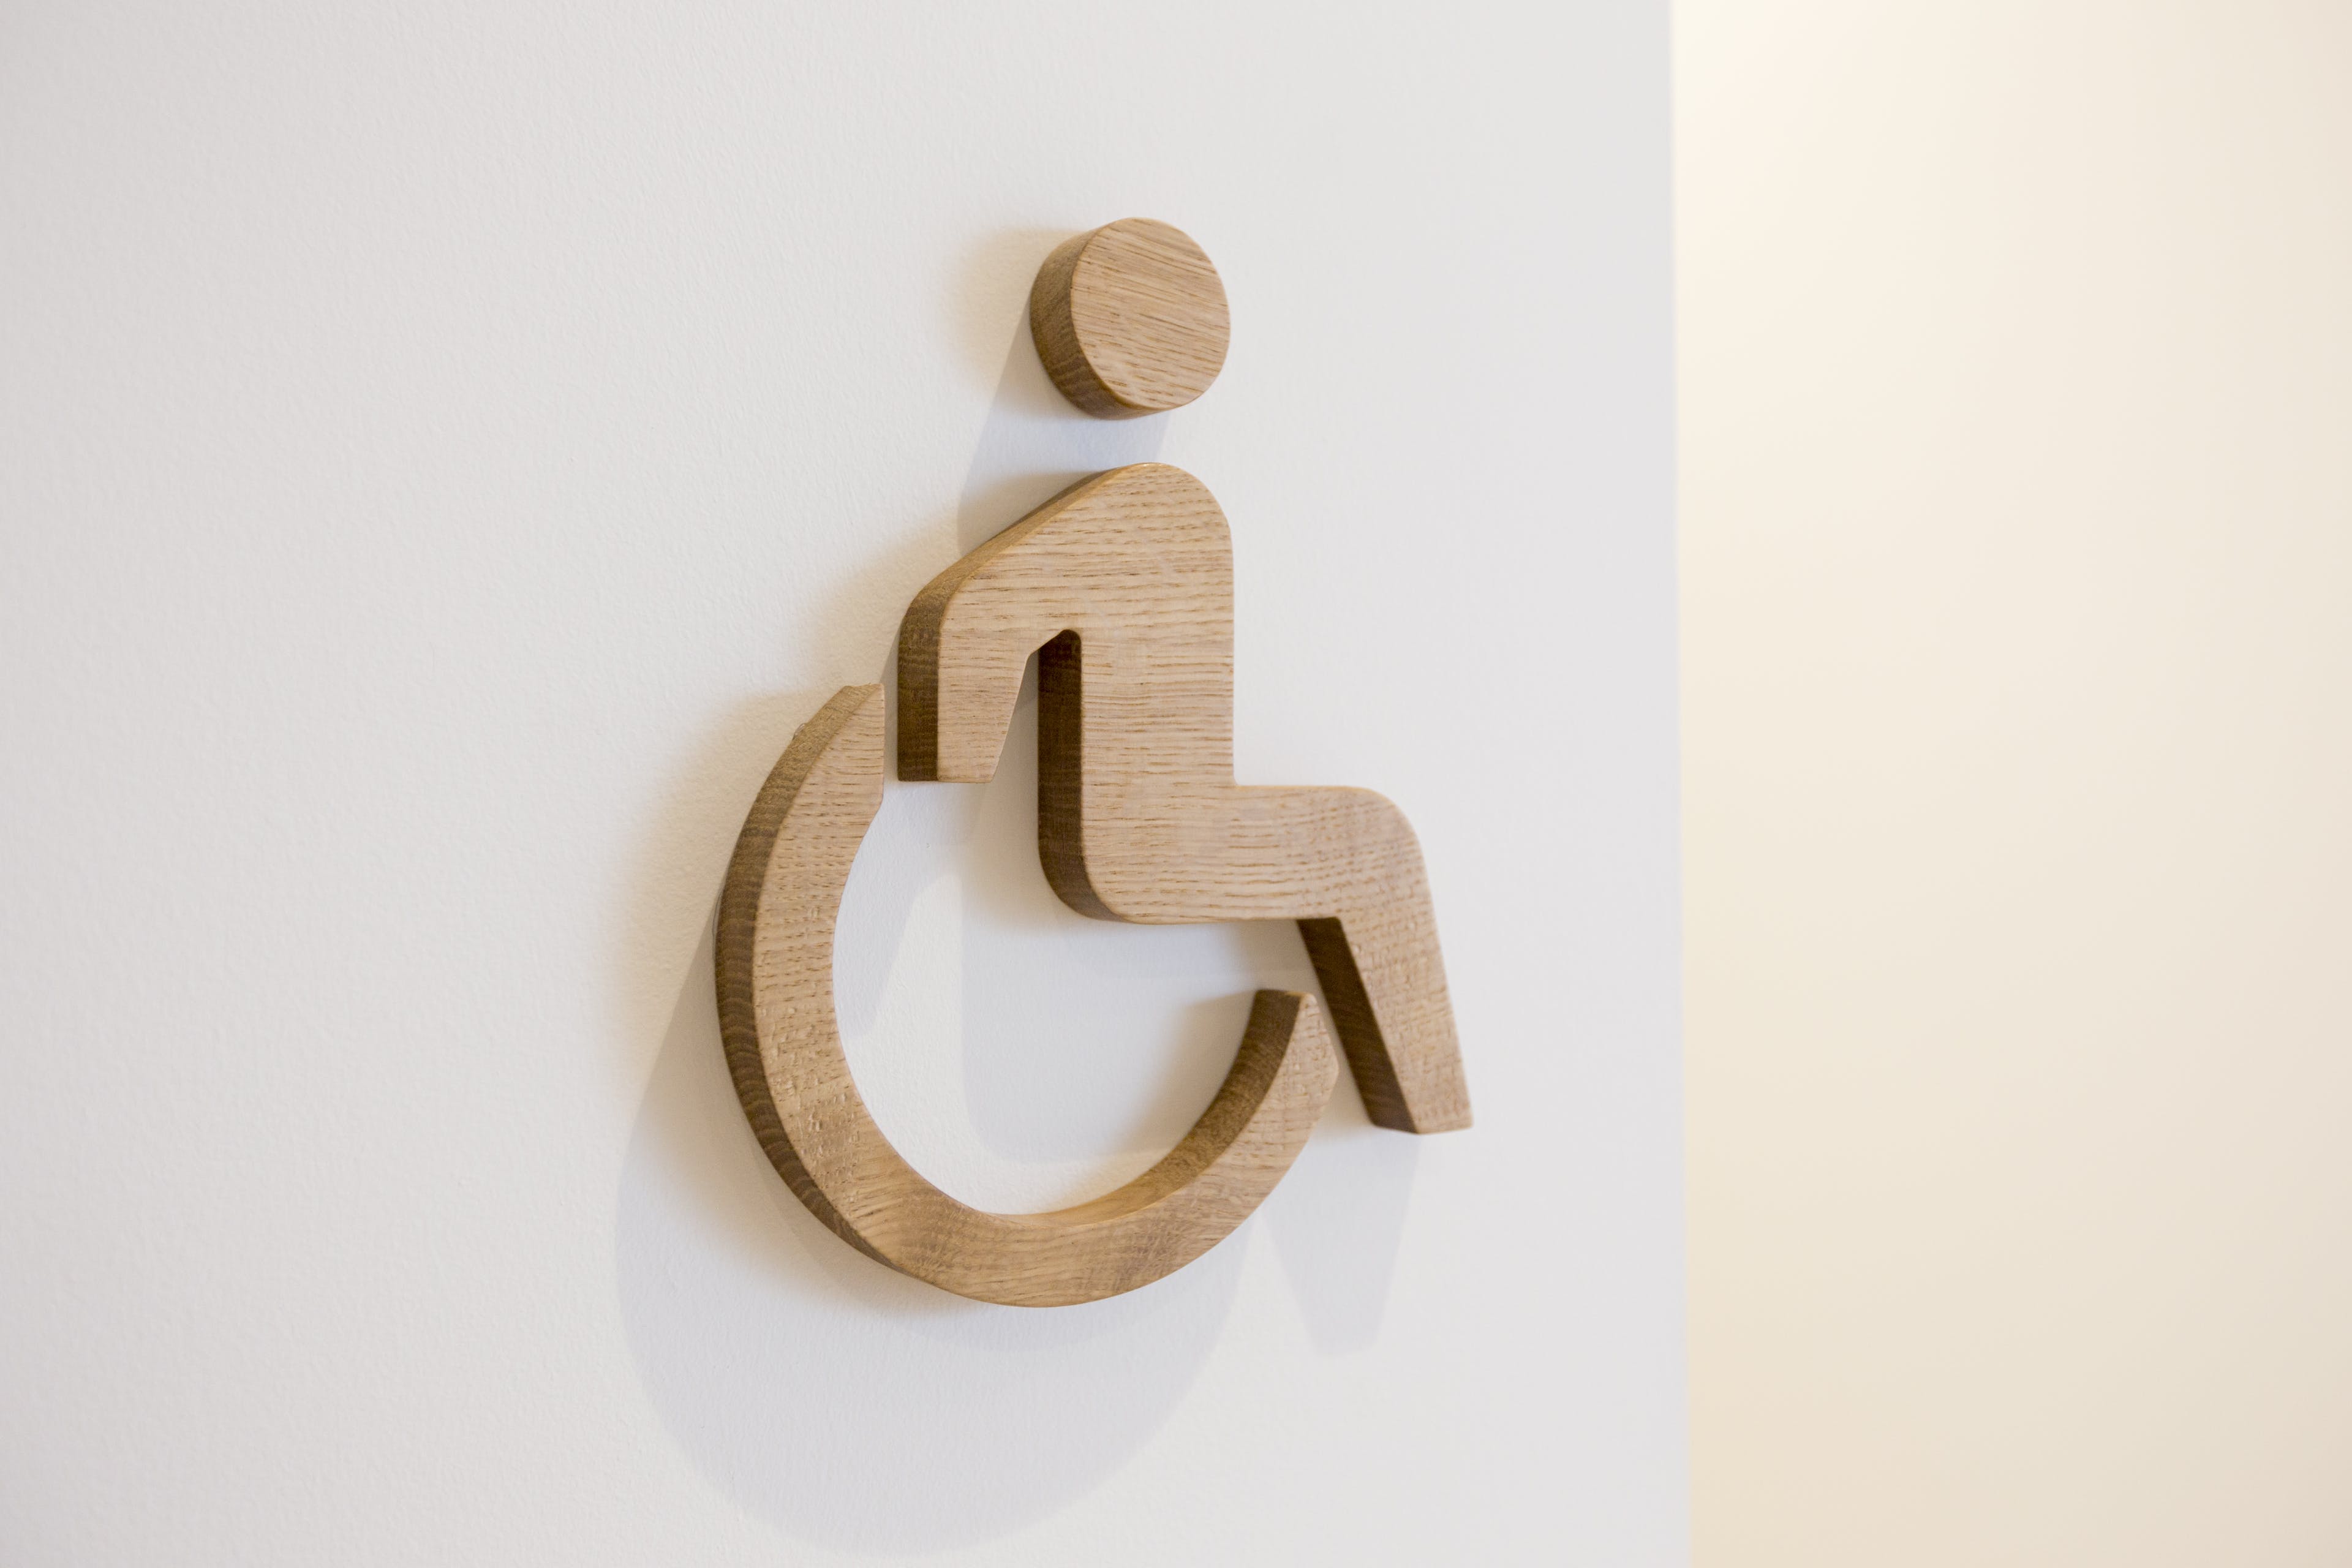 A wooden wheelchair icon